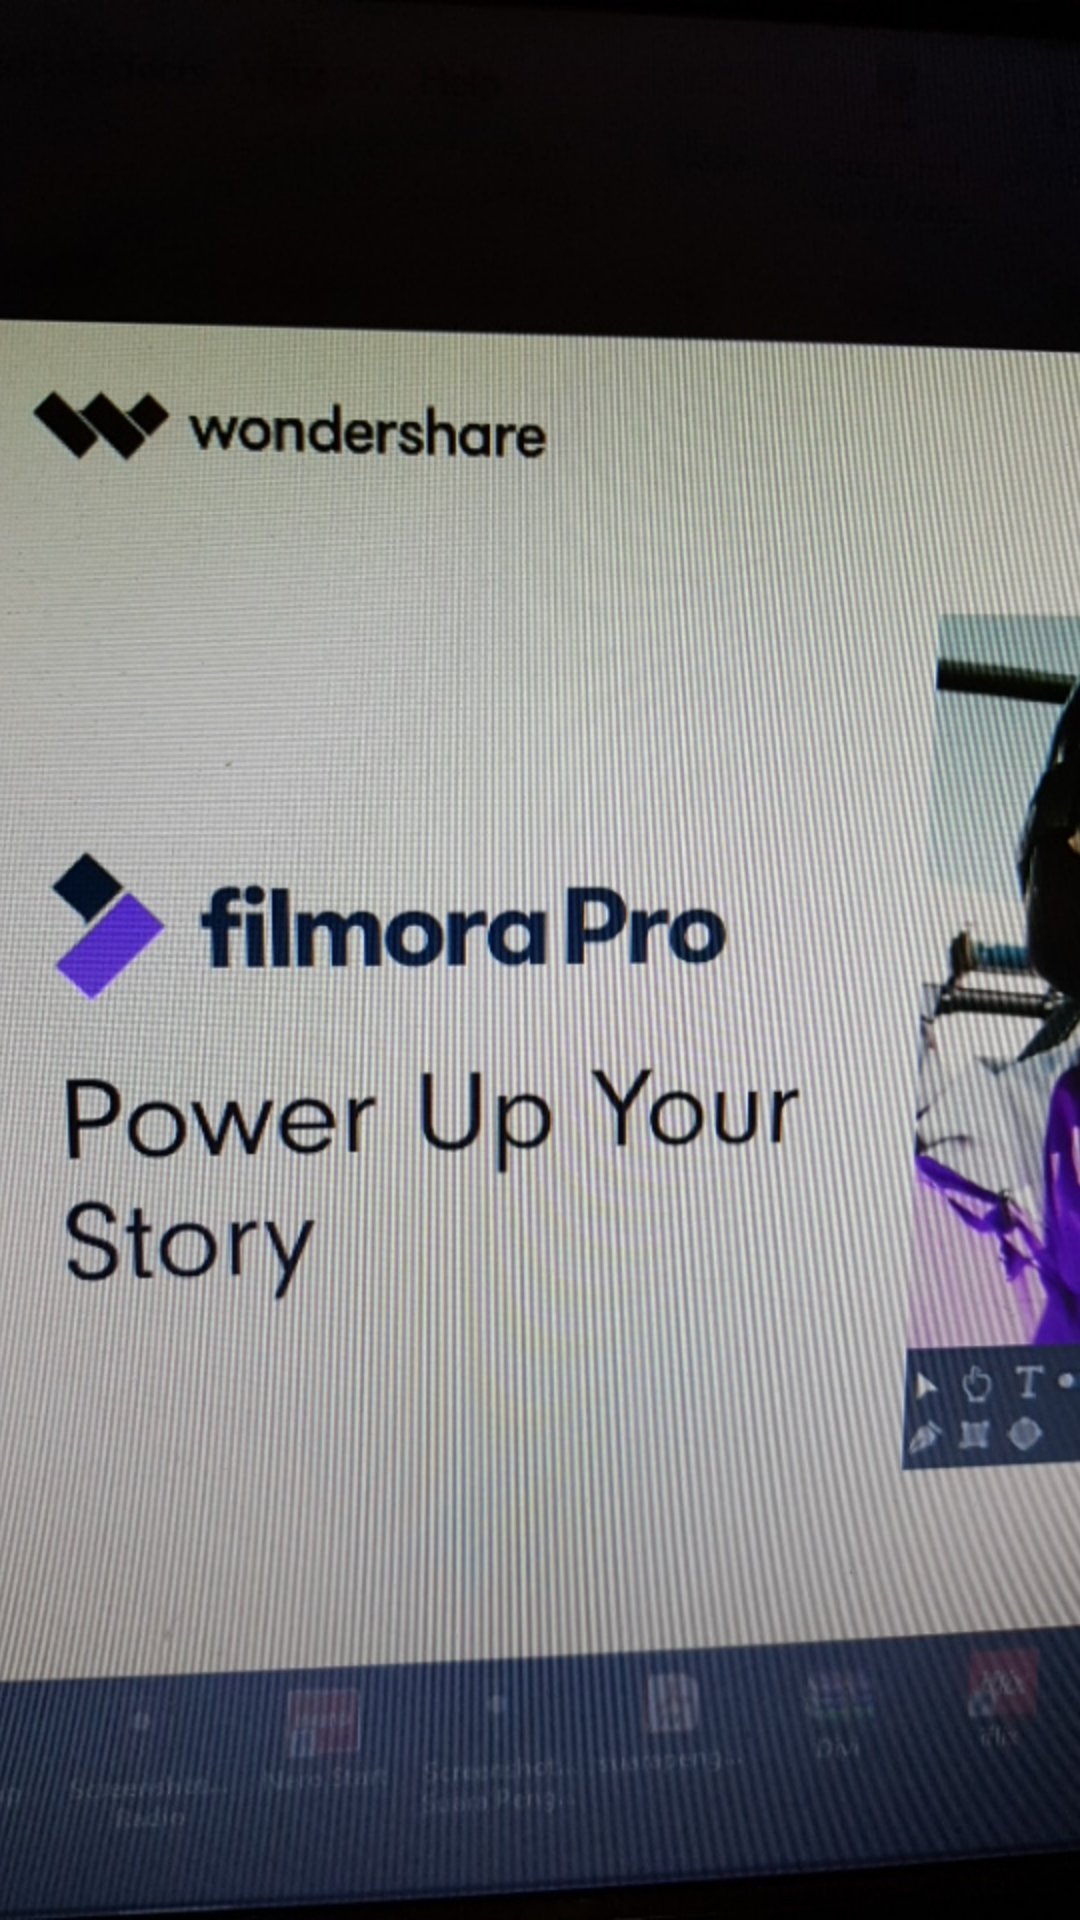 [PROMO] Wondershare Fil   mora Pro Video Editor - Lifetime